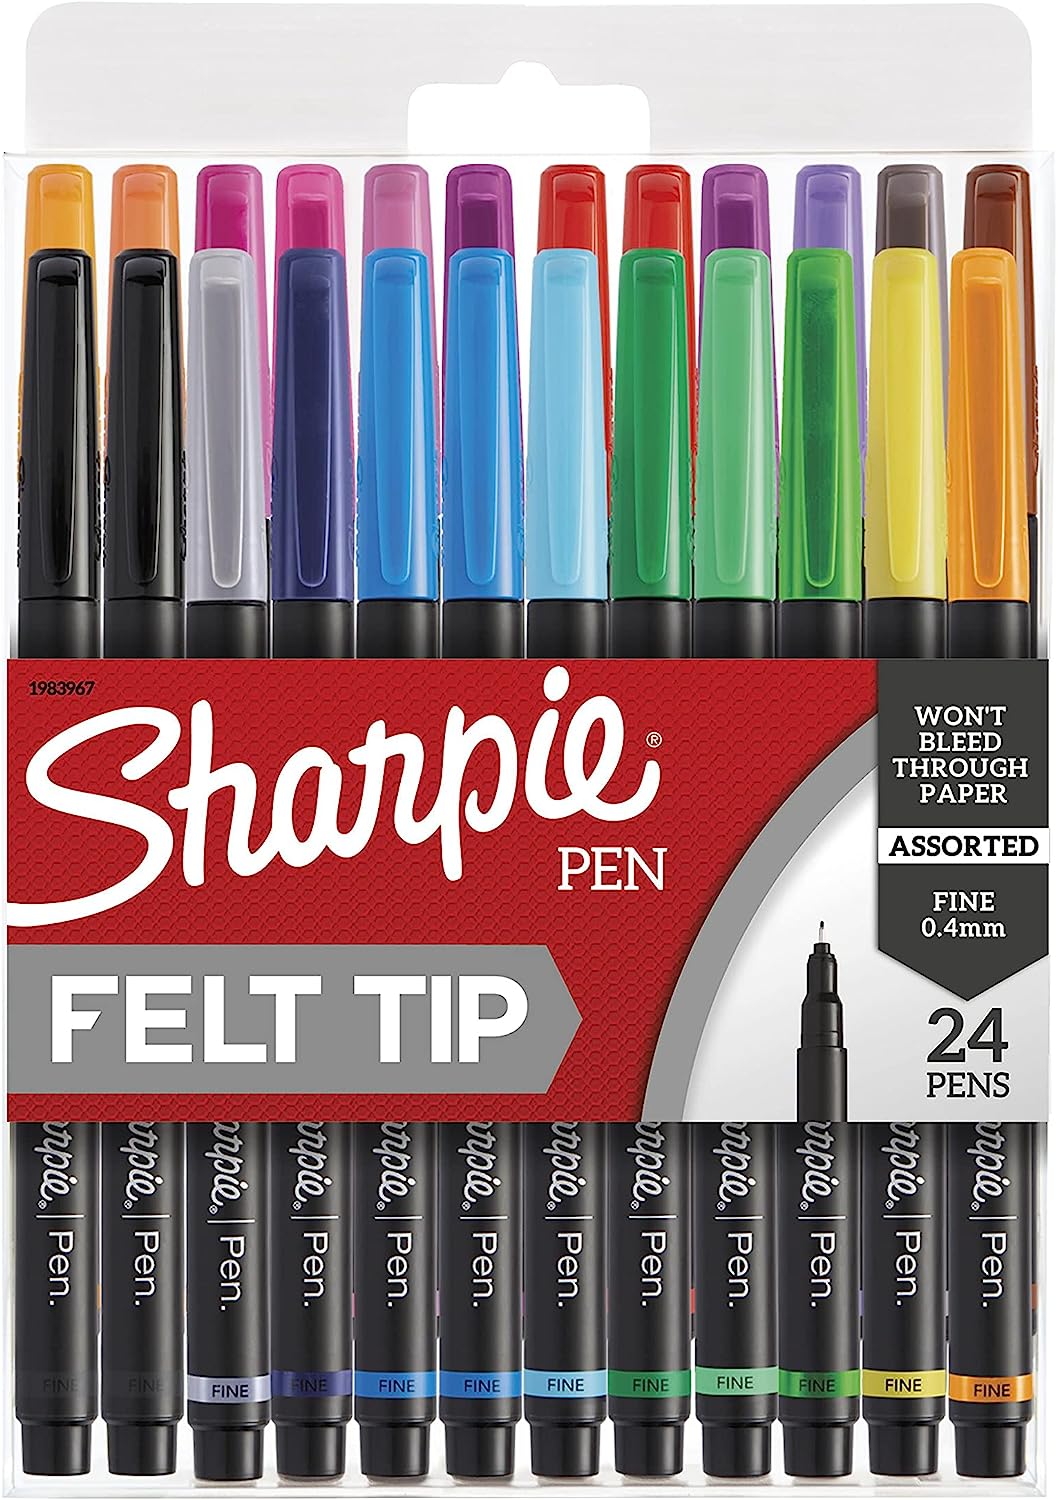 Felt Tip Pens, Fine Point (0.4mm), Assorted Colors, 24 Count (1983967)